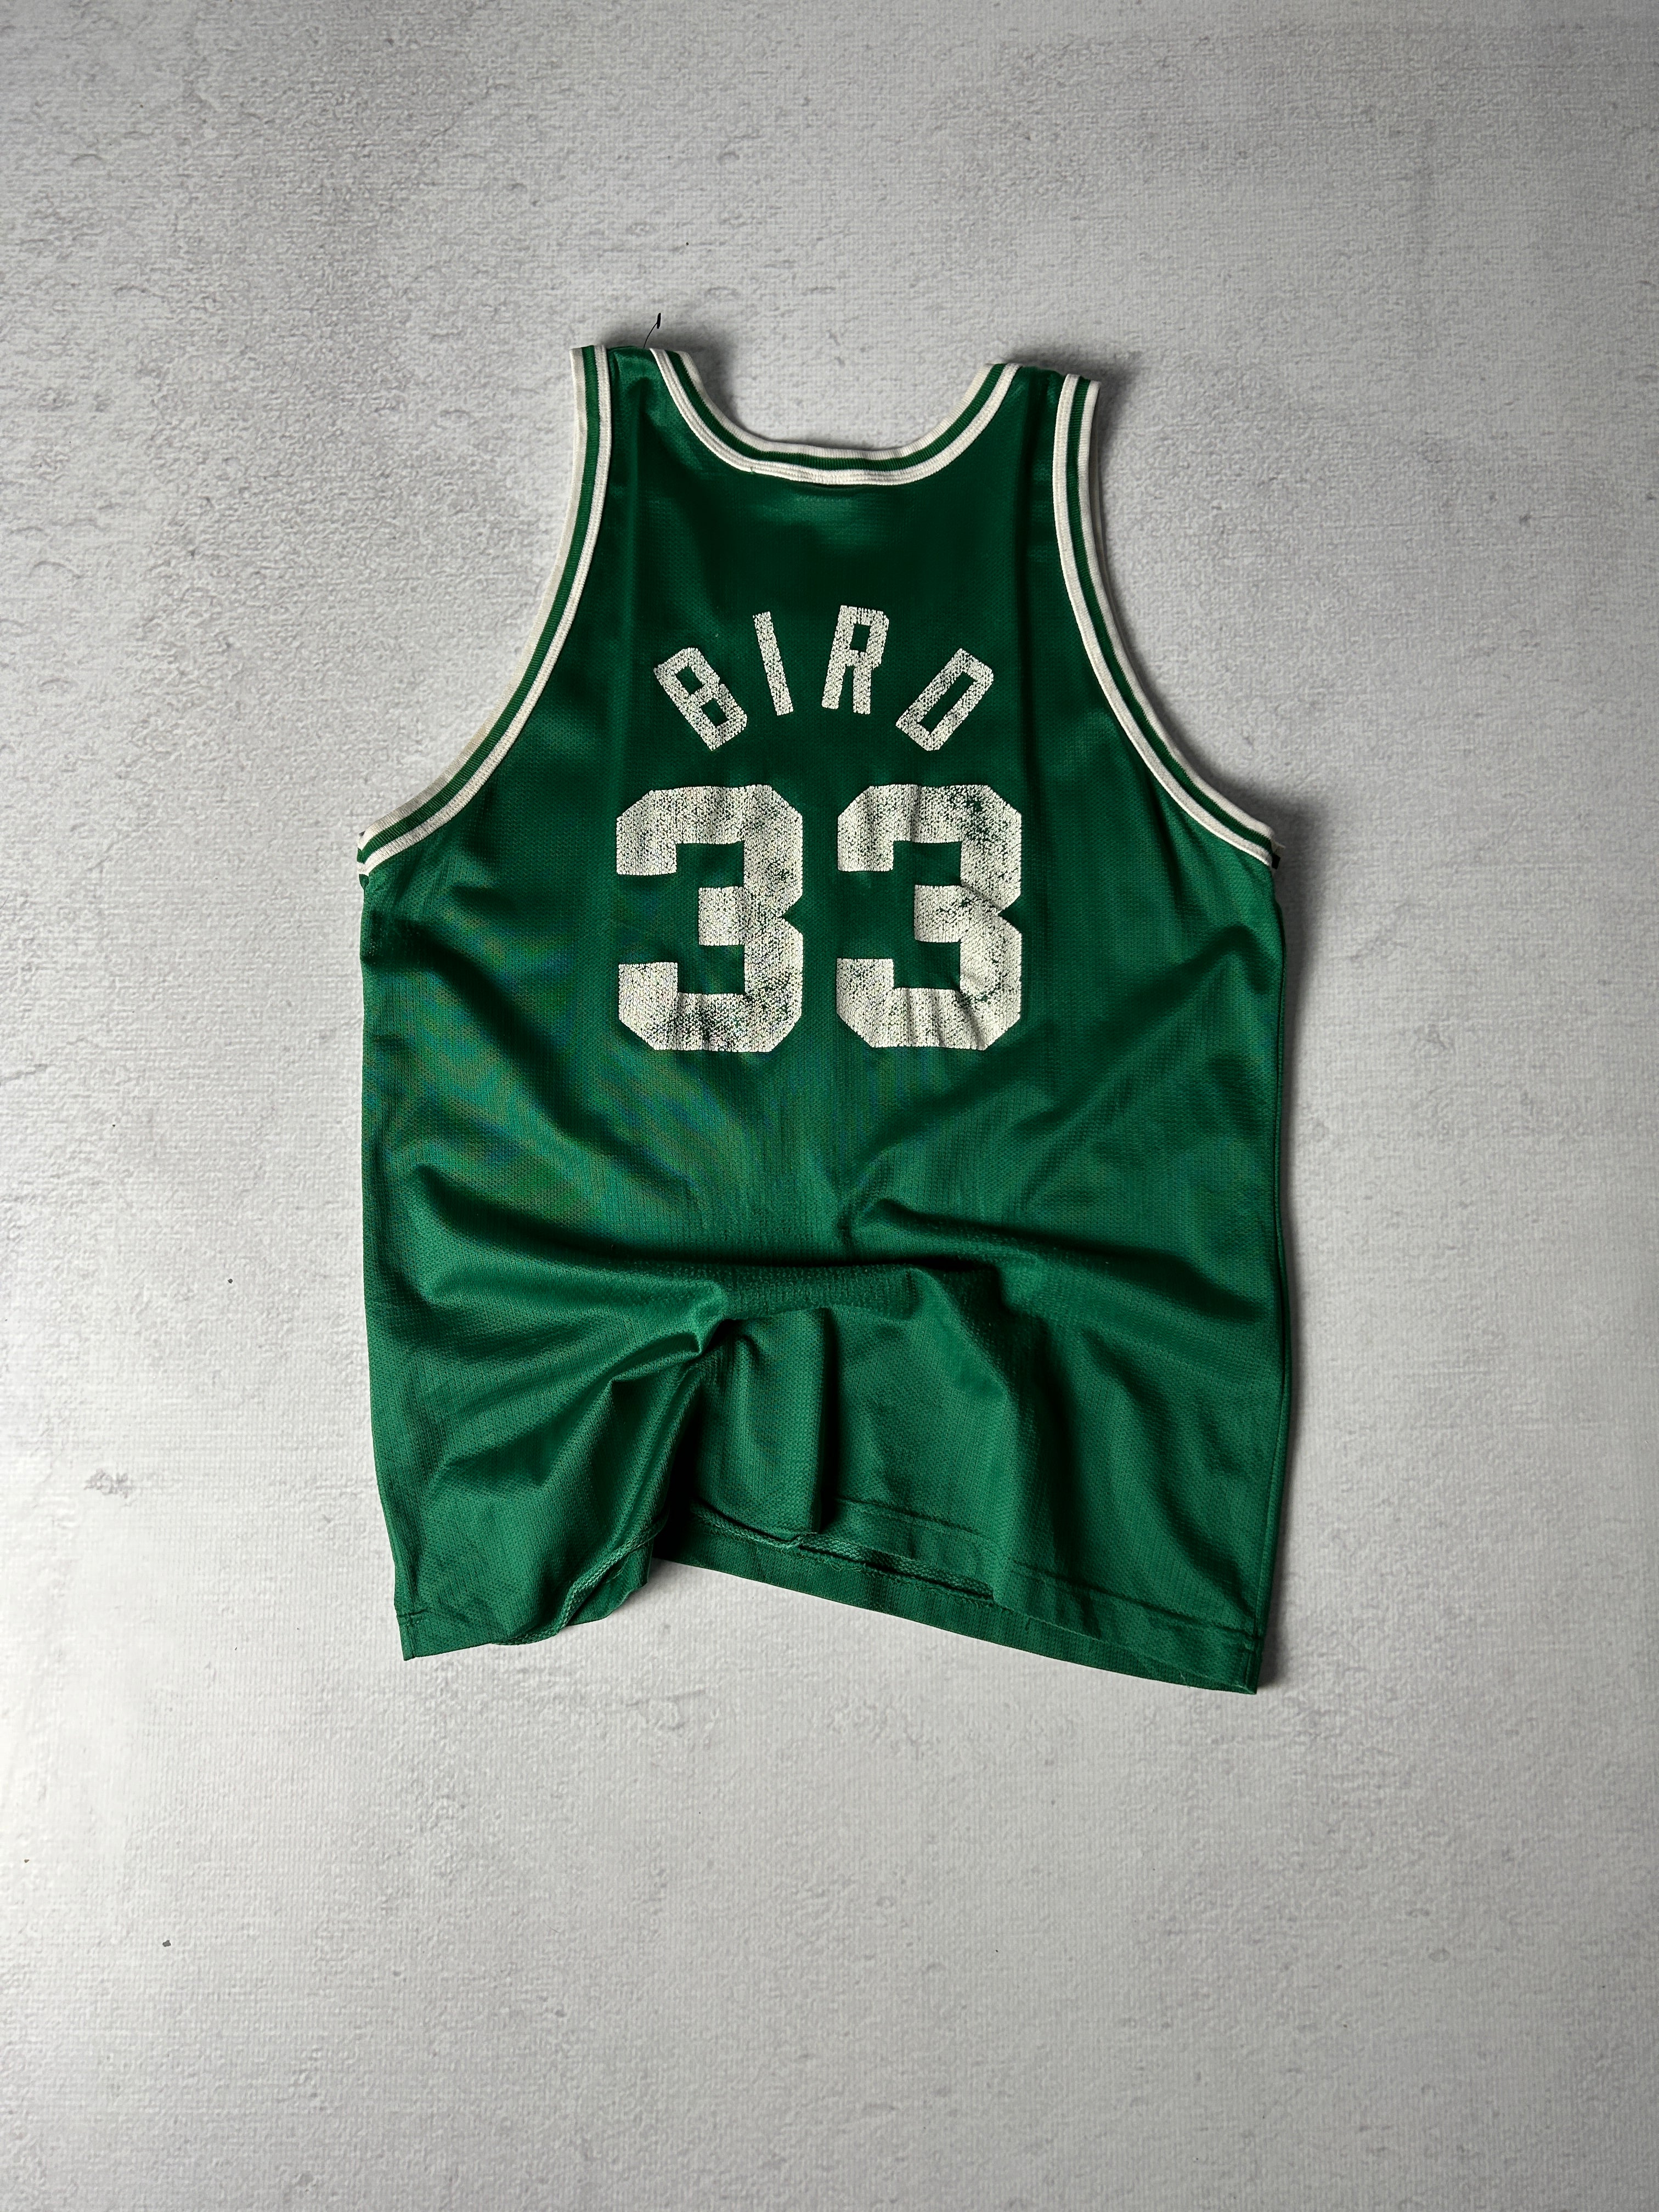 Vintage Champion NBA Boston Celtics Larry Bird #33 Jersey - Men's Medium